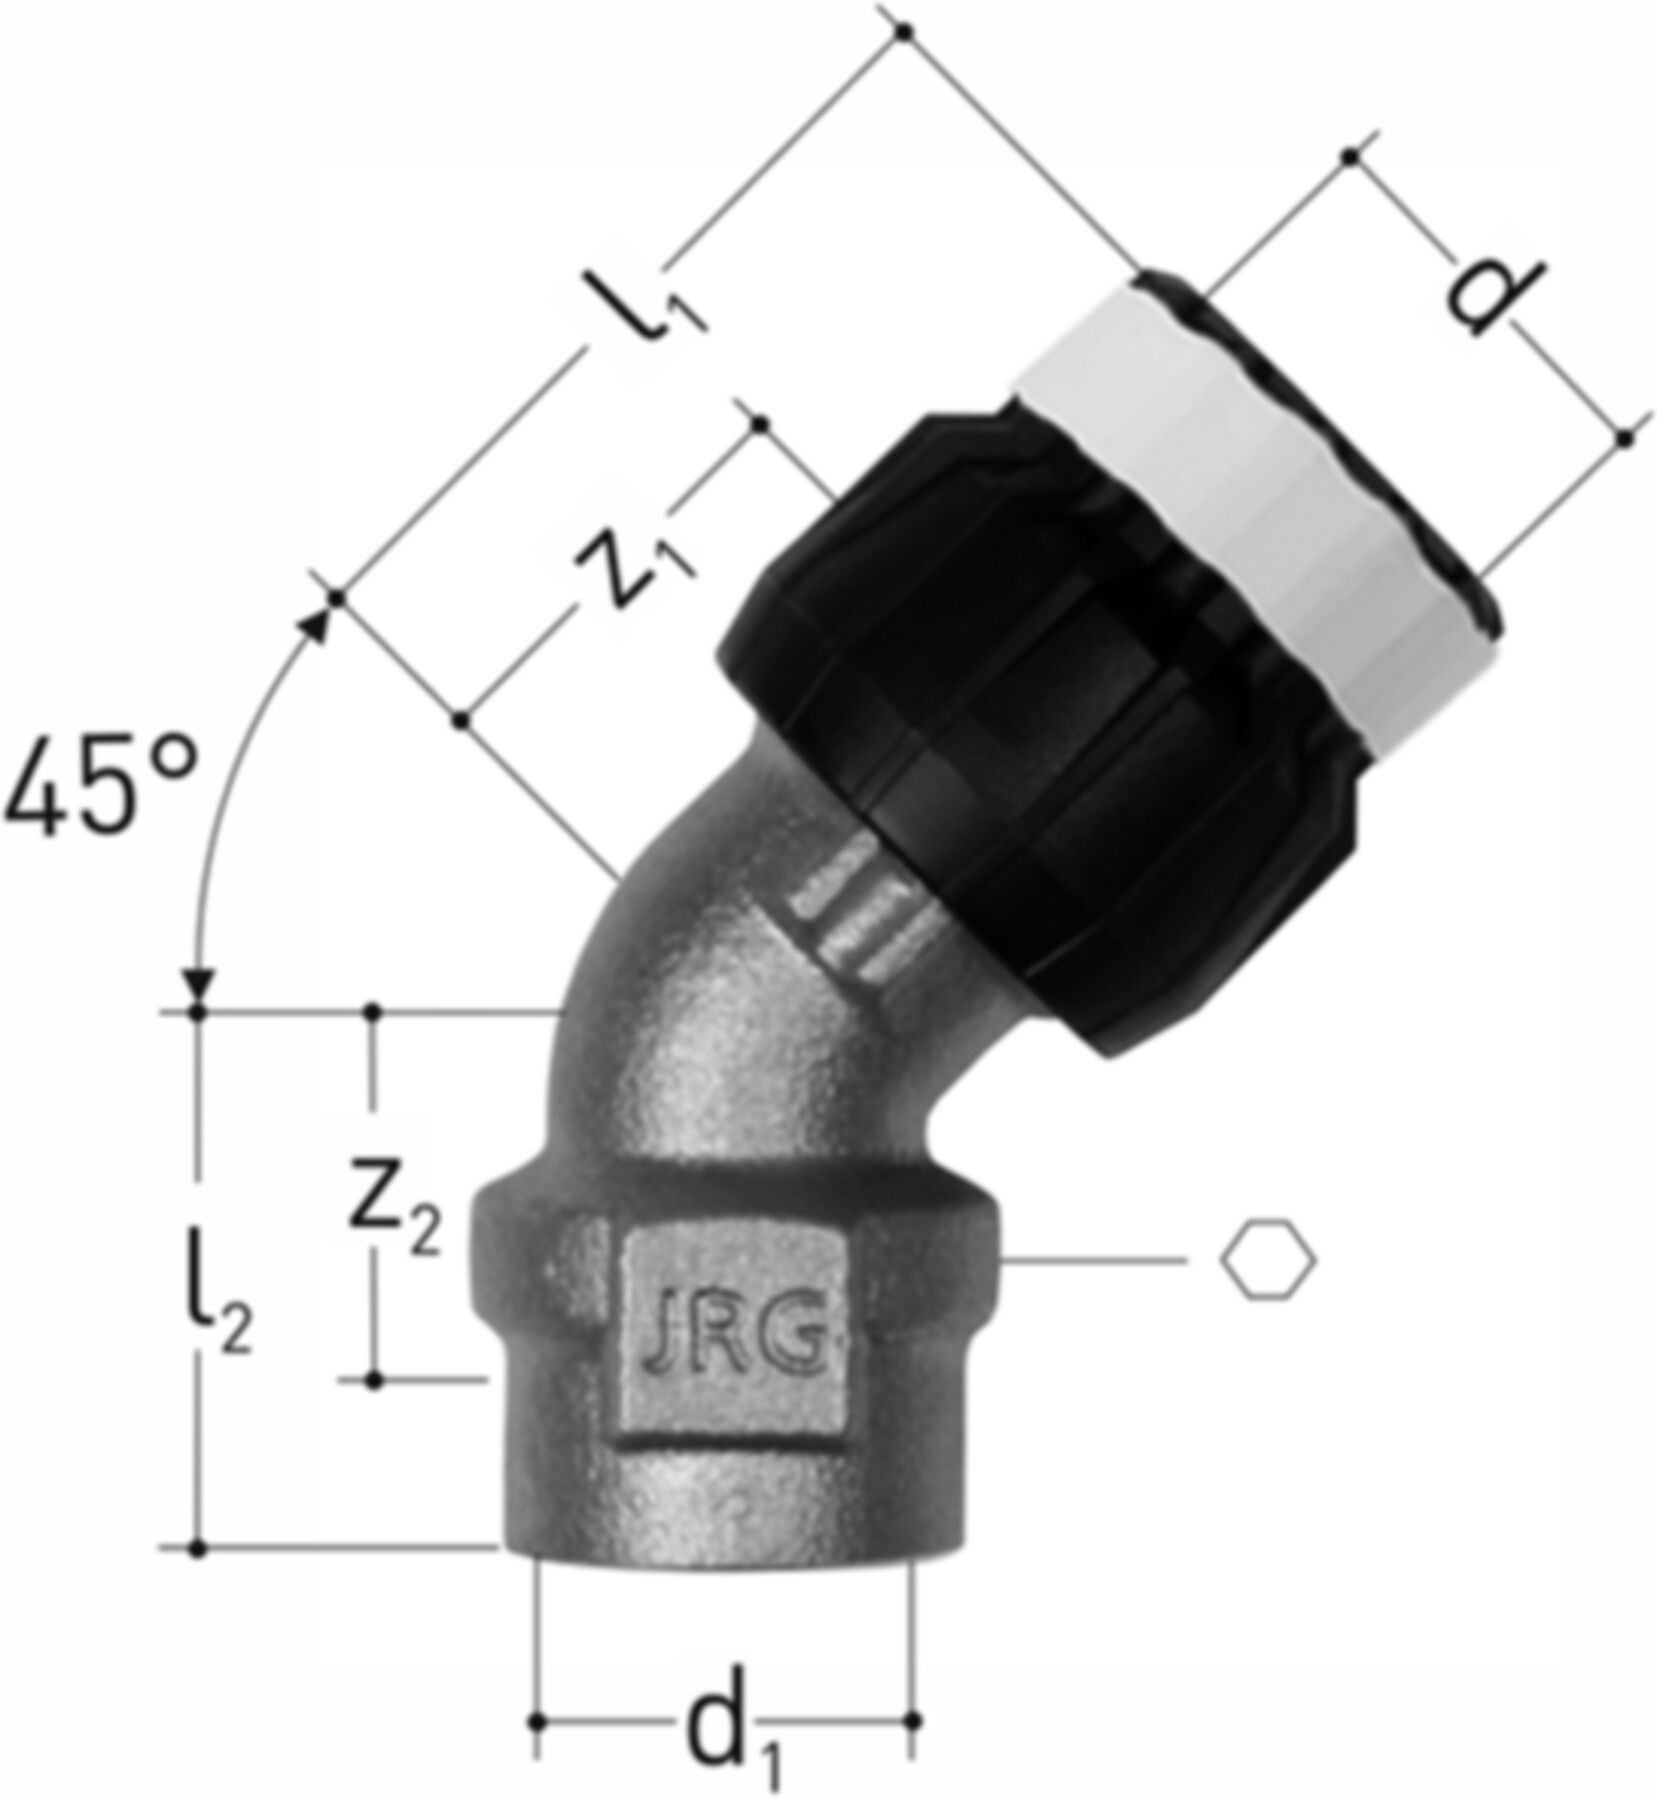 Winkel 45° mit IG 11/2"-50 4677.510 - JRG Sanipex-MT-Formstücke/Rohre in Stg.